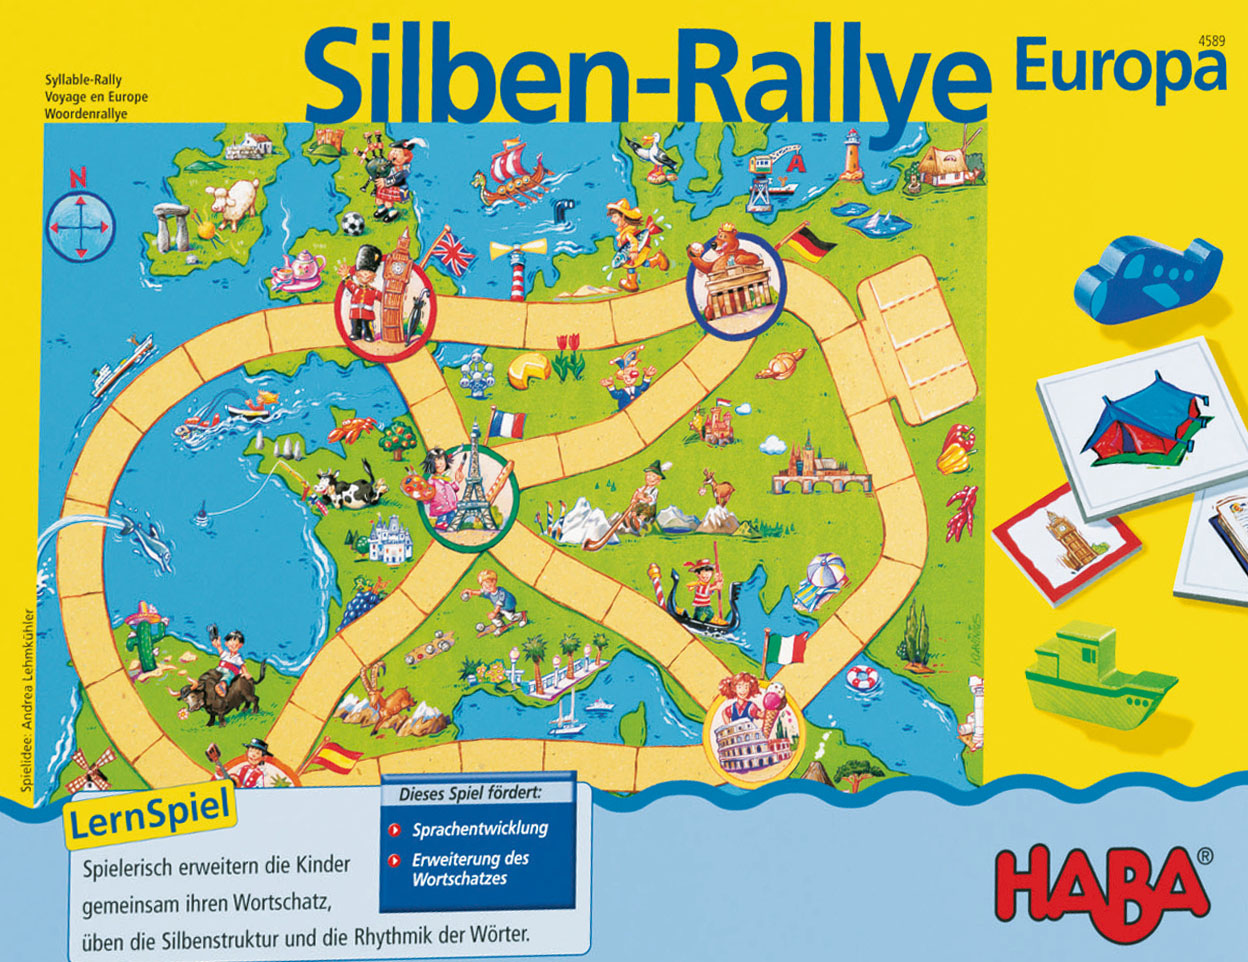 Silben-Rallye Europa (Woordenrallye)